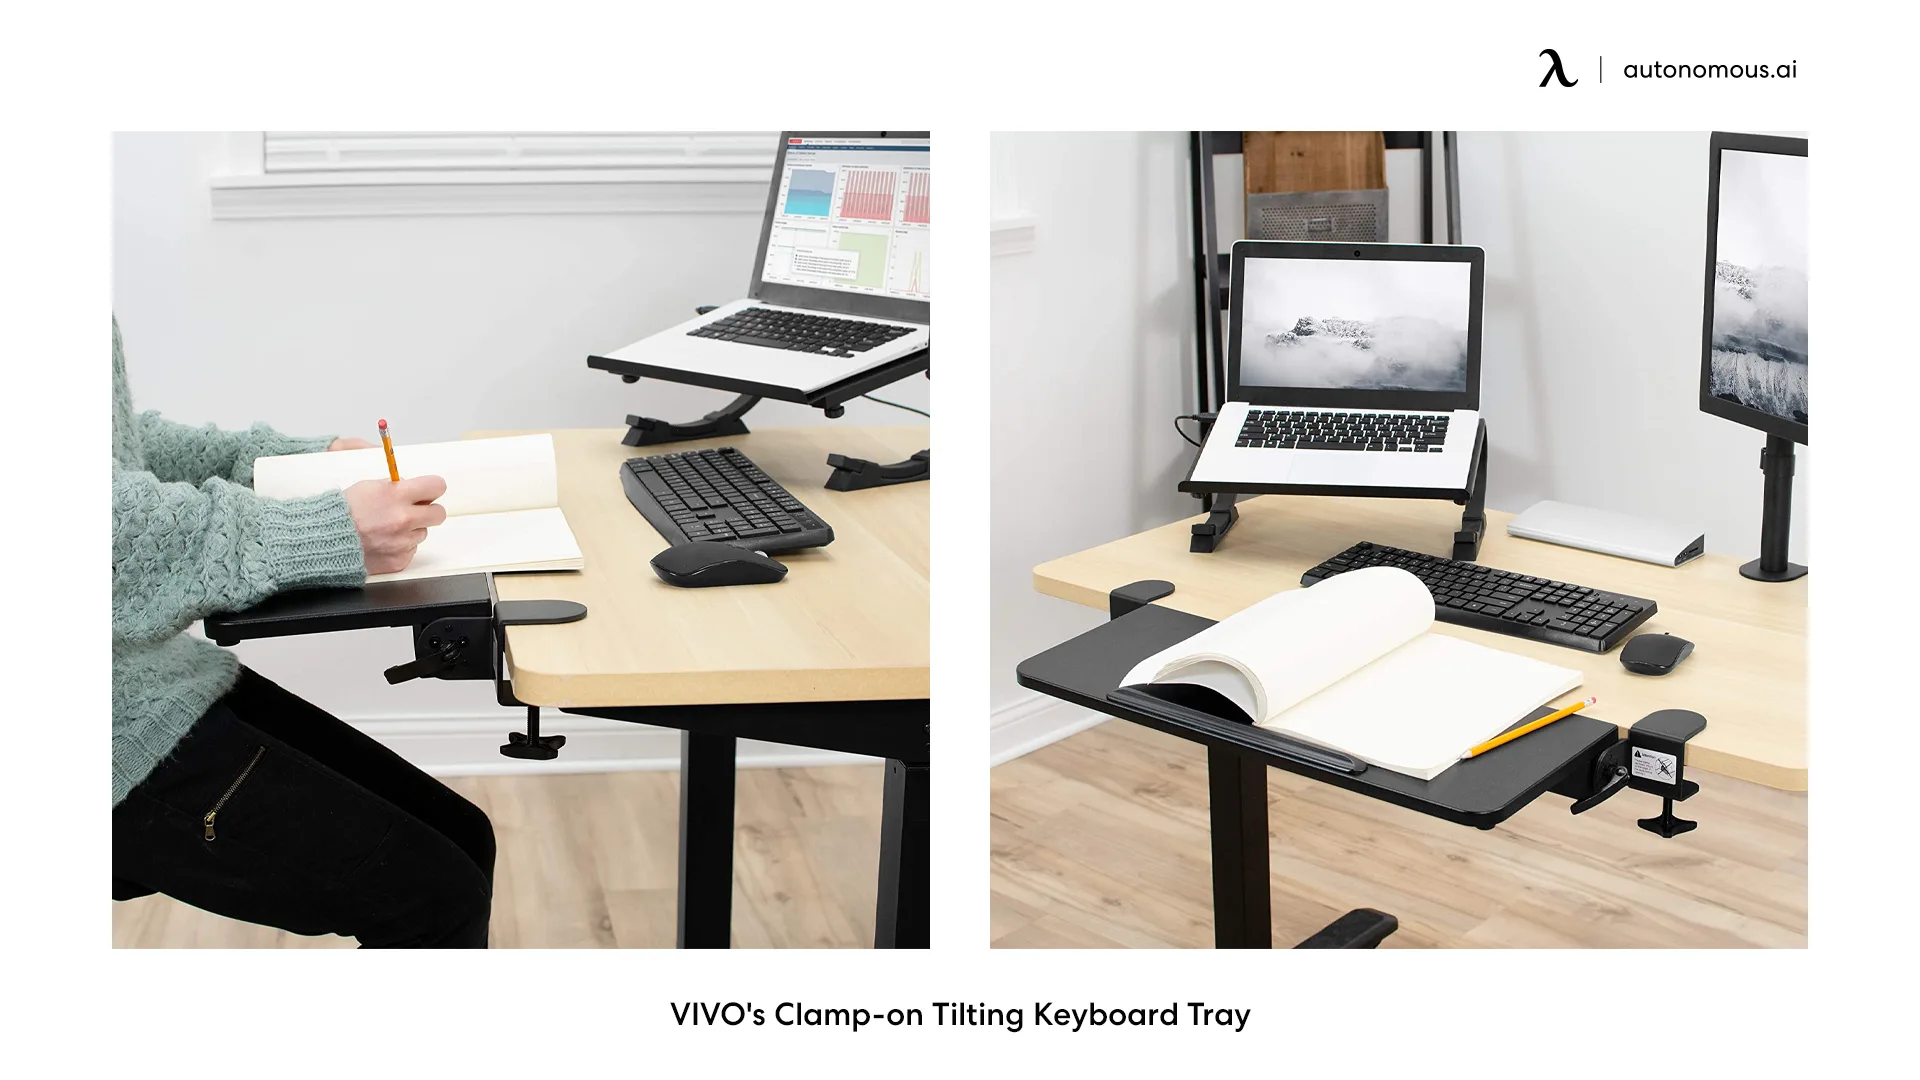 VIVO's Clamp-on Tilting Keyboard Tray